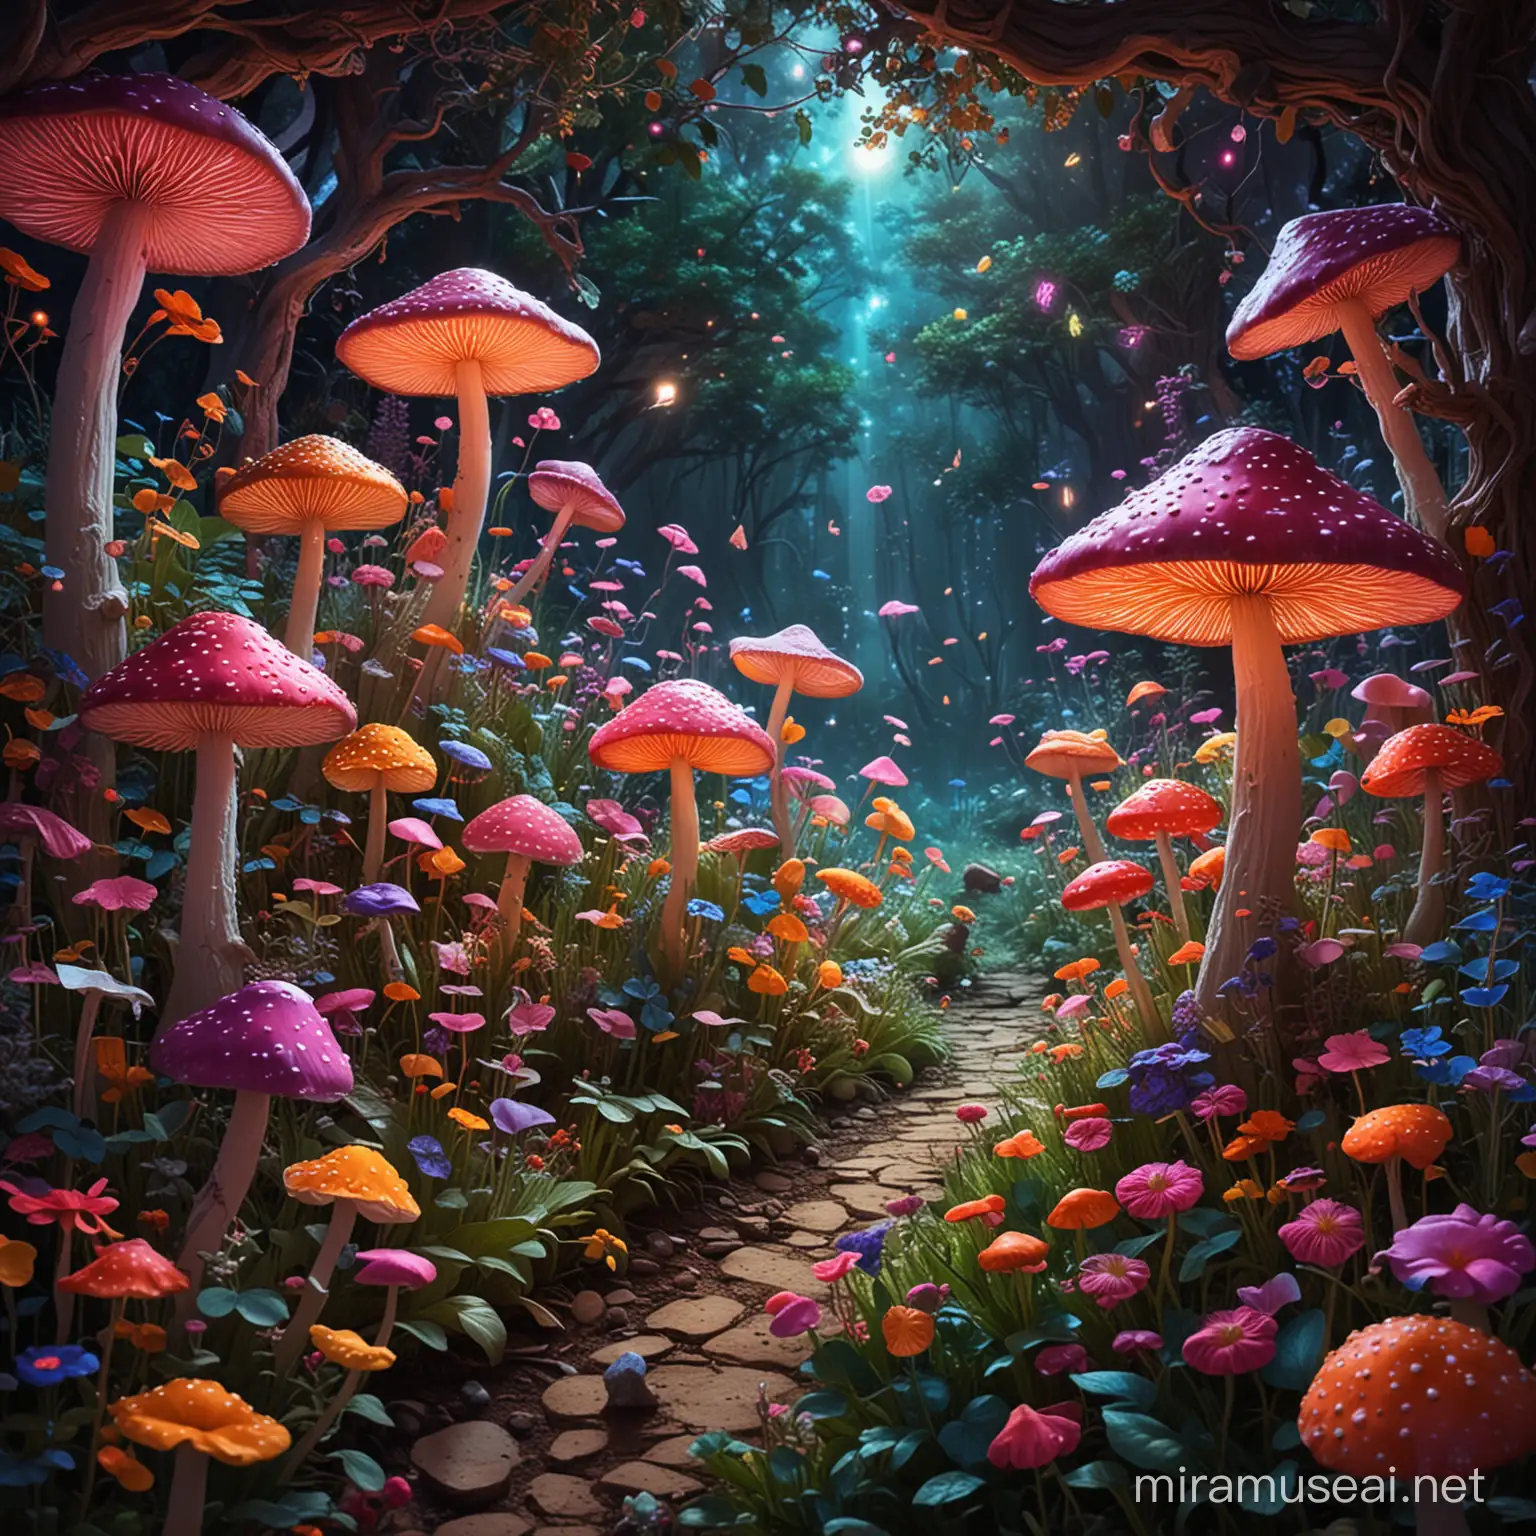 Romantic, whimsical, colorful, neon, flowers, mushrooms, space, garden, dancing fairies, euphoric